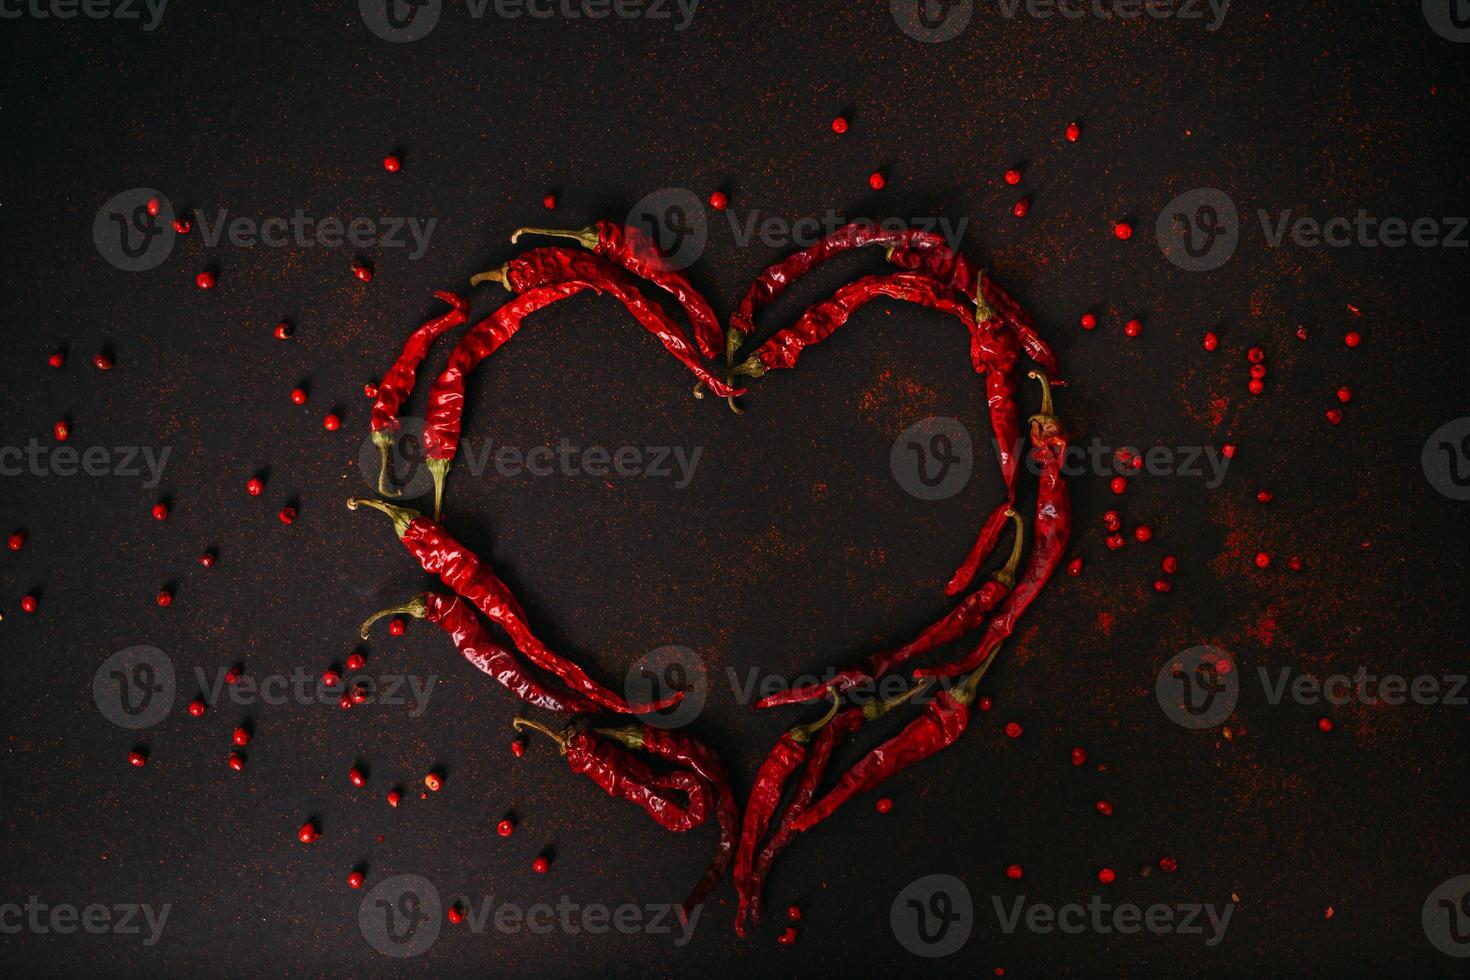 Chilli pepper heart on black photo